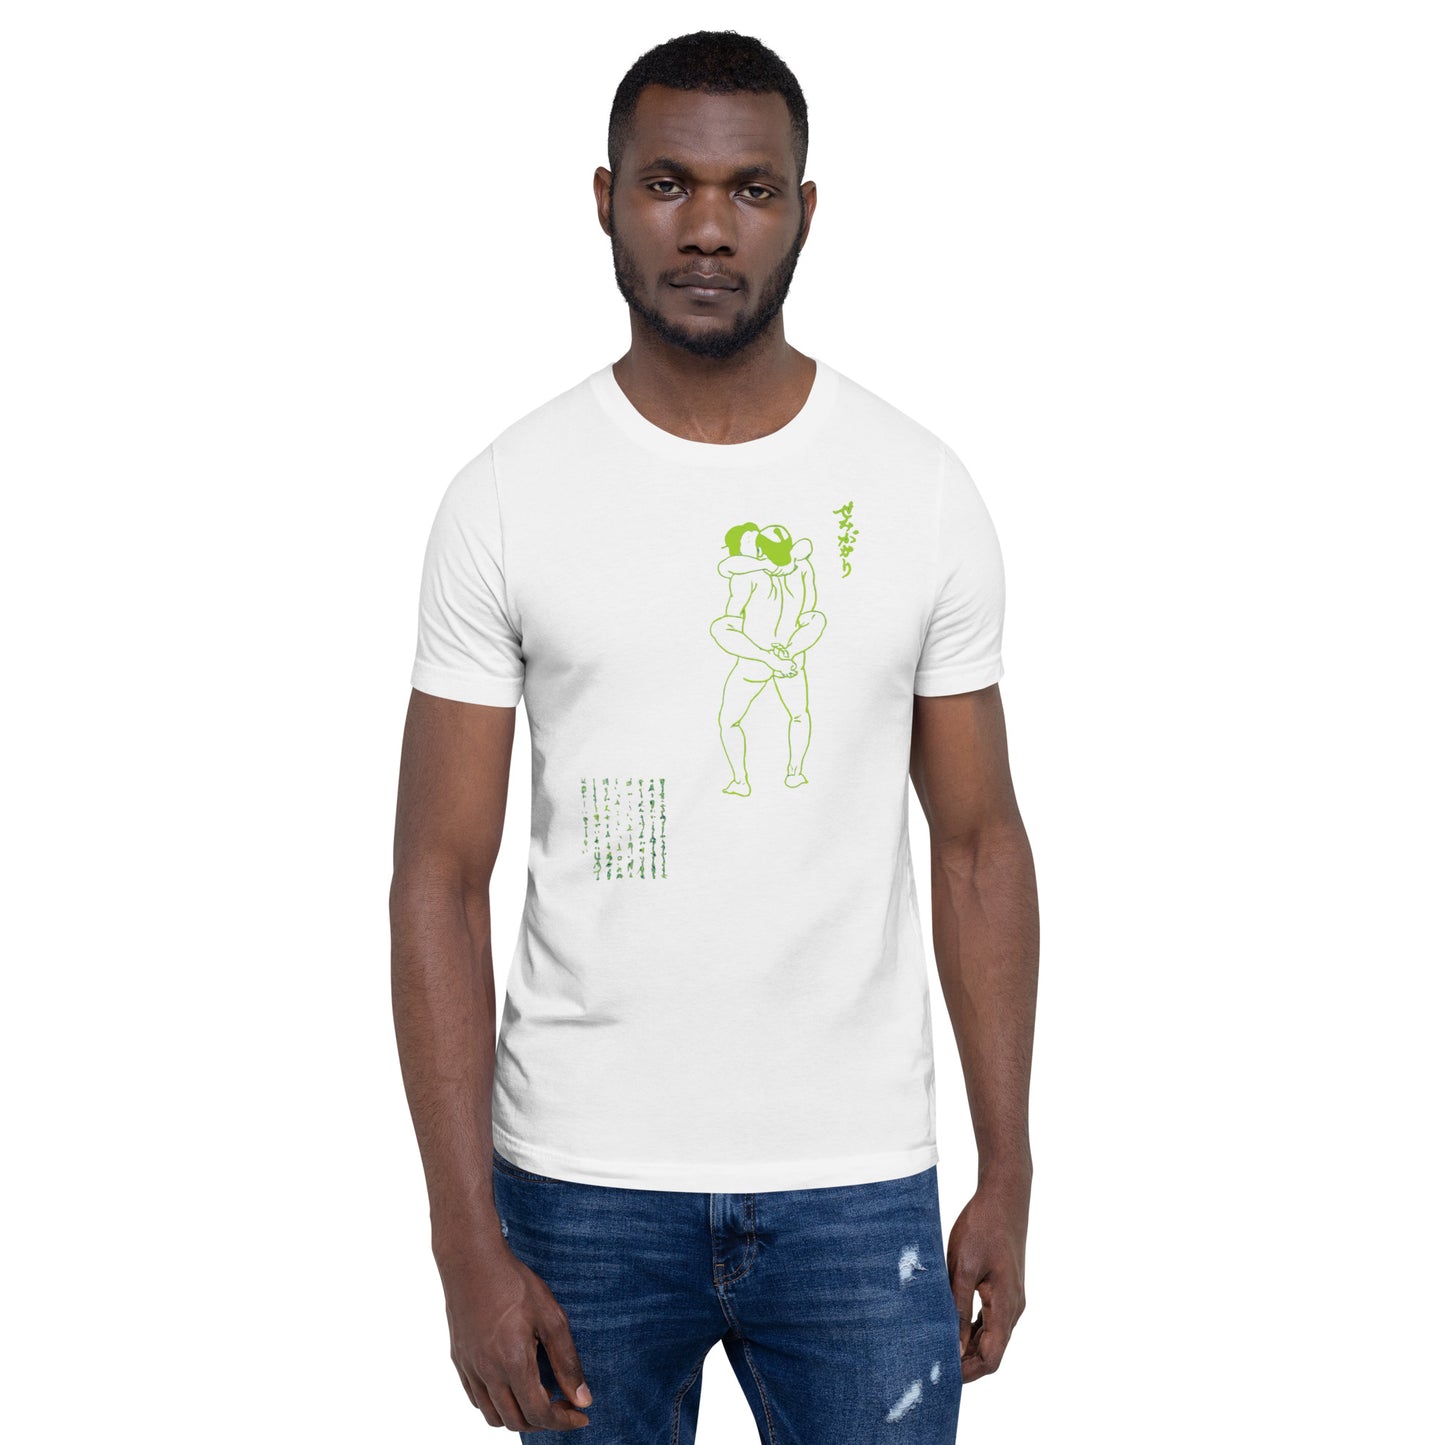 Unisex t-shirt "44 SEMI GAKARI" White